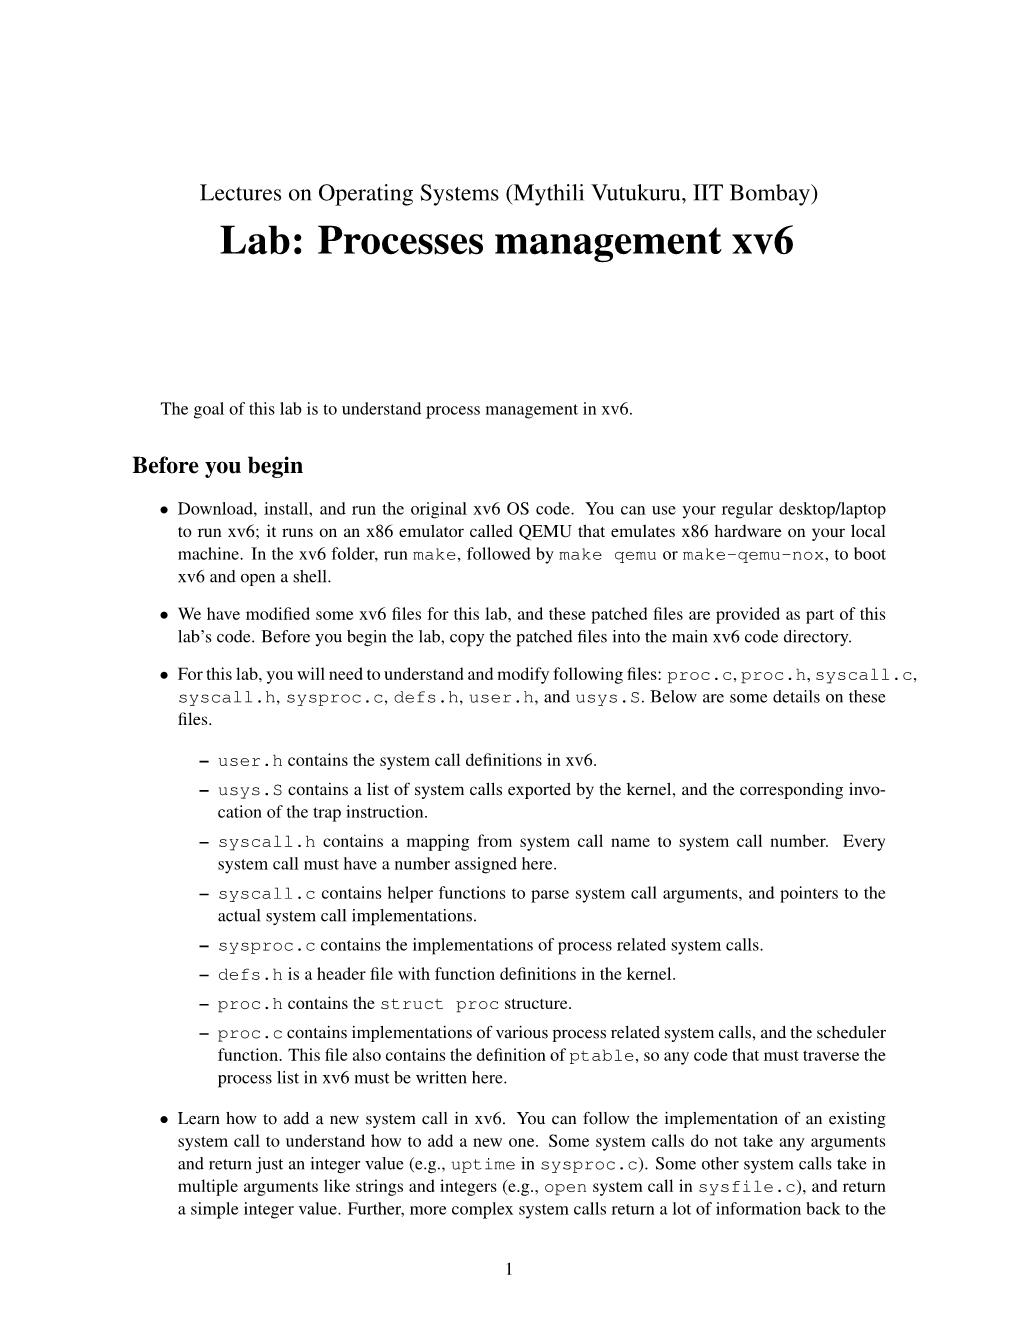 Lab: Processes Management Xv6